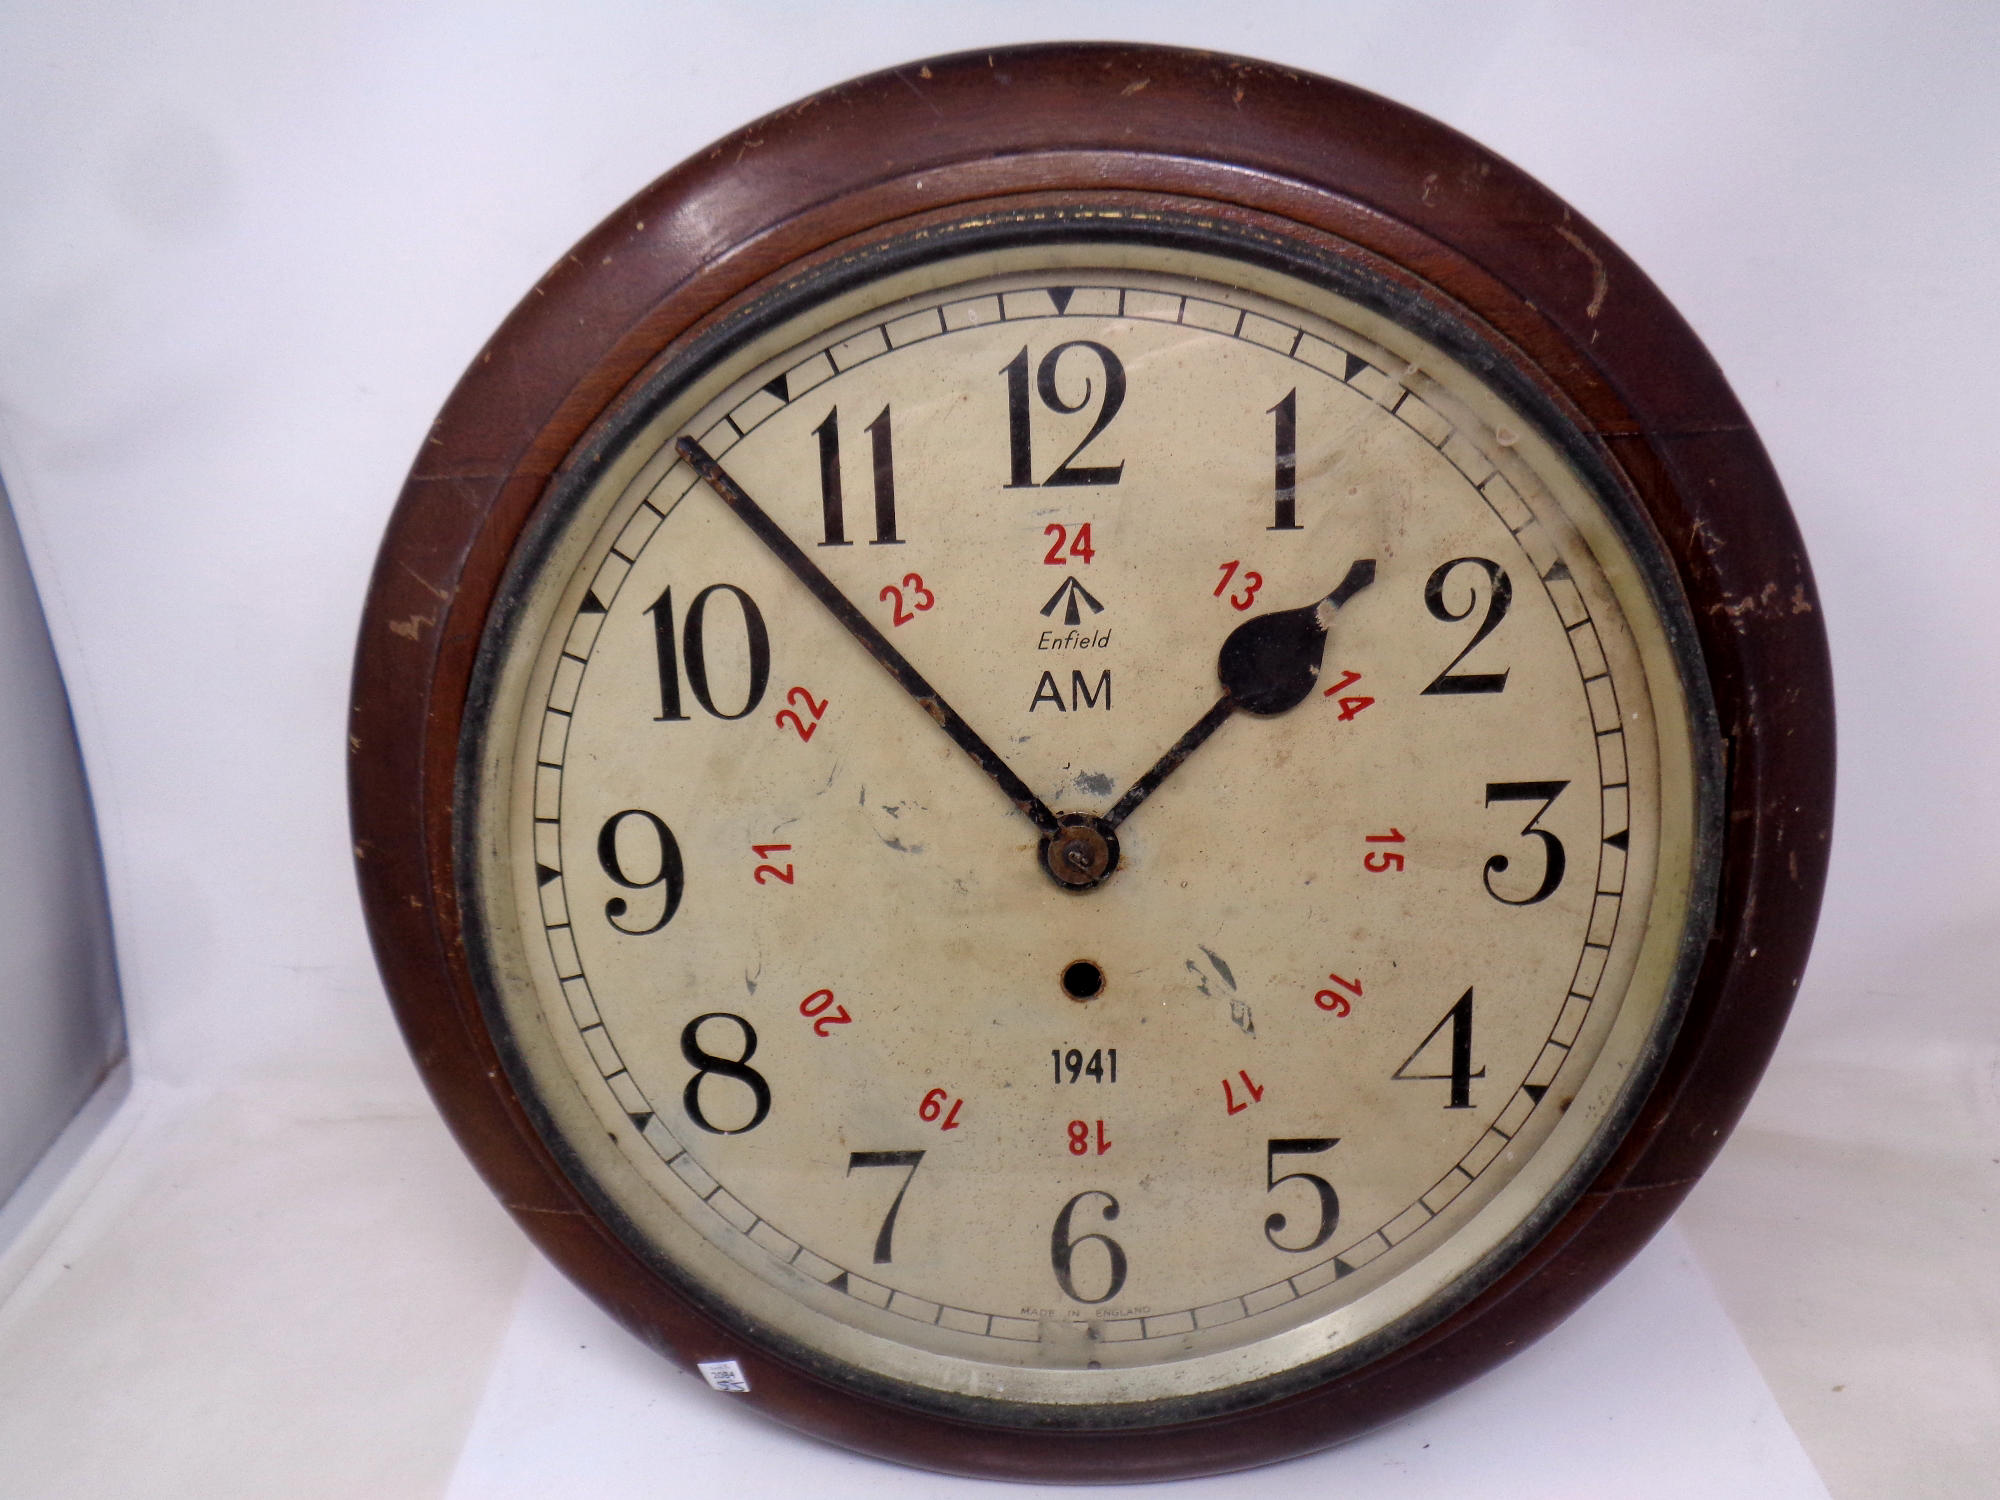 A twentieth century circular wall clock with Enfield dial